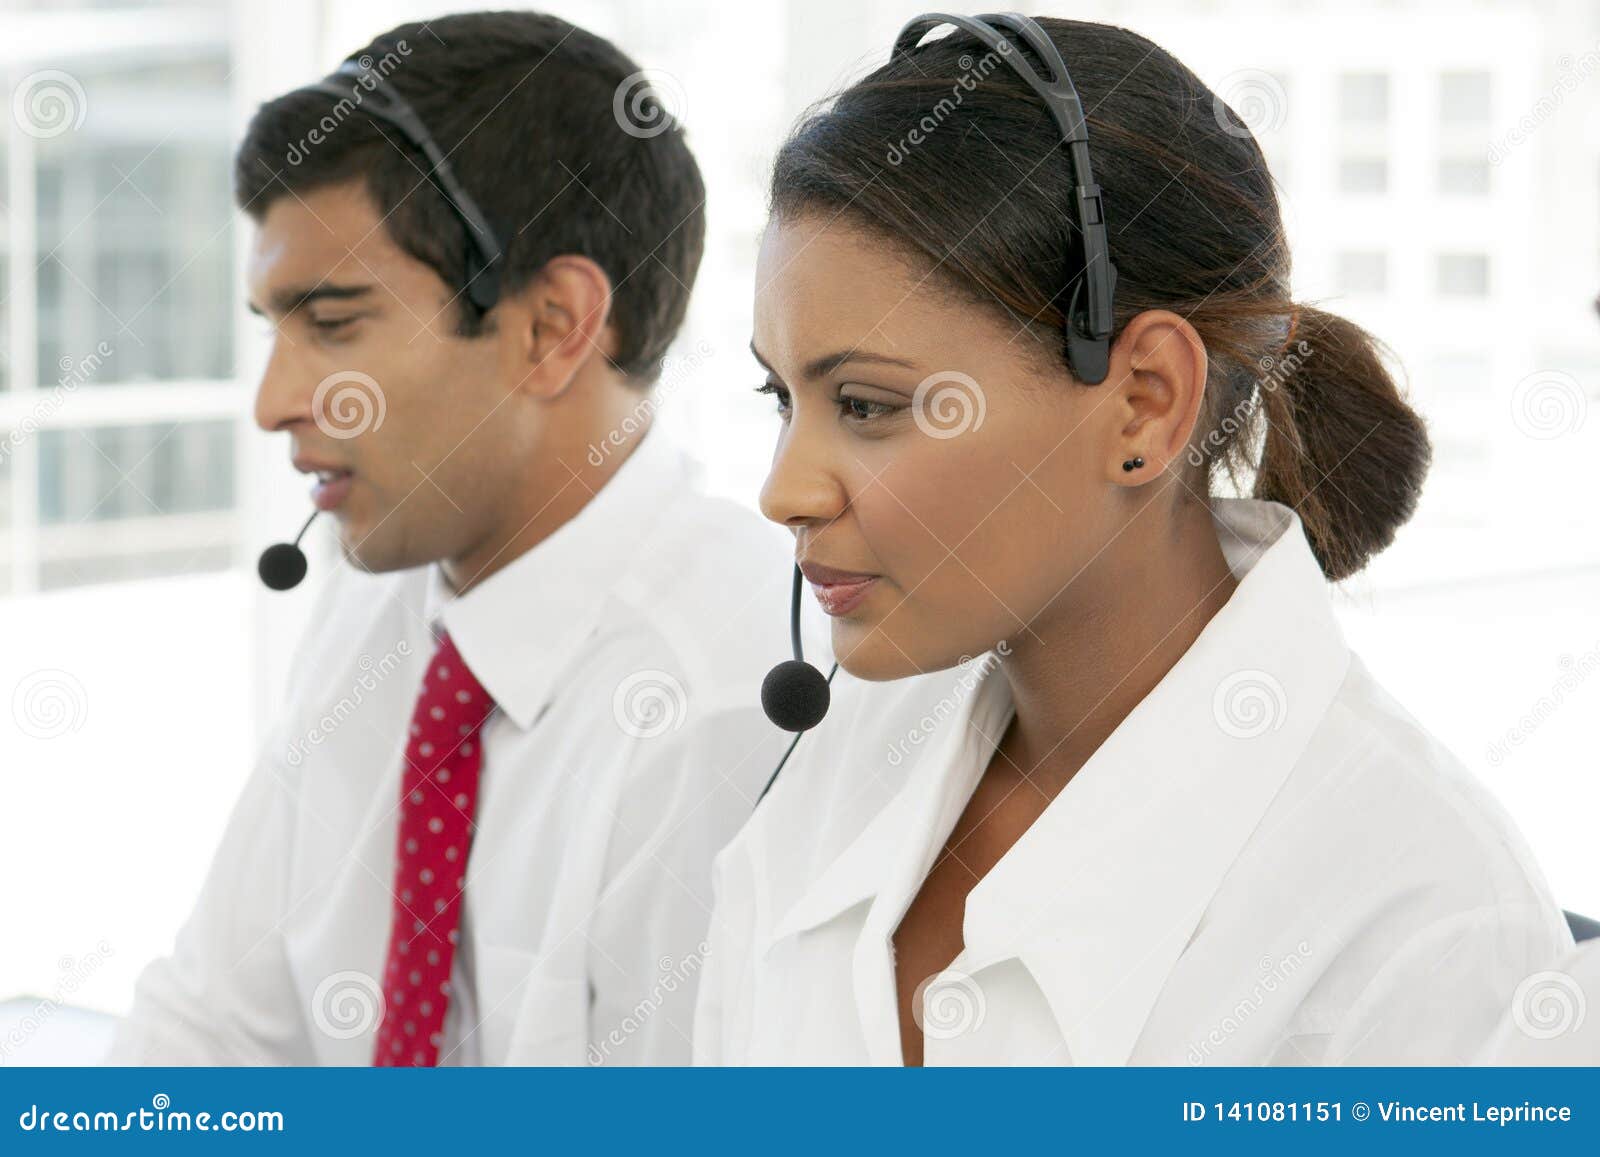 customer service representatives at work in multiethnic call center